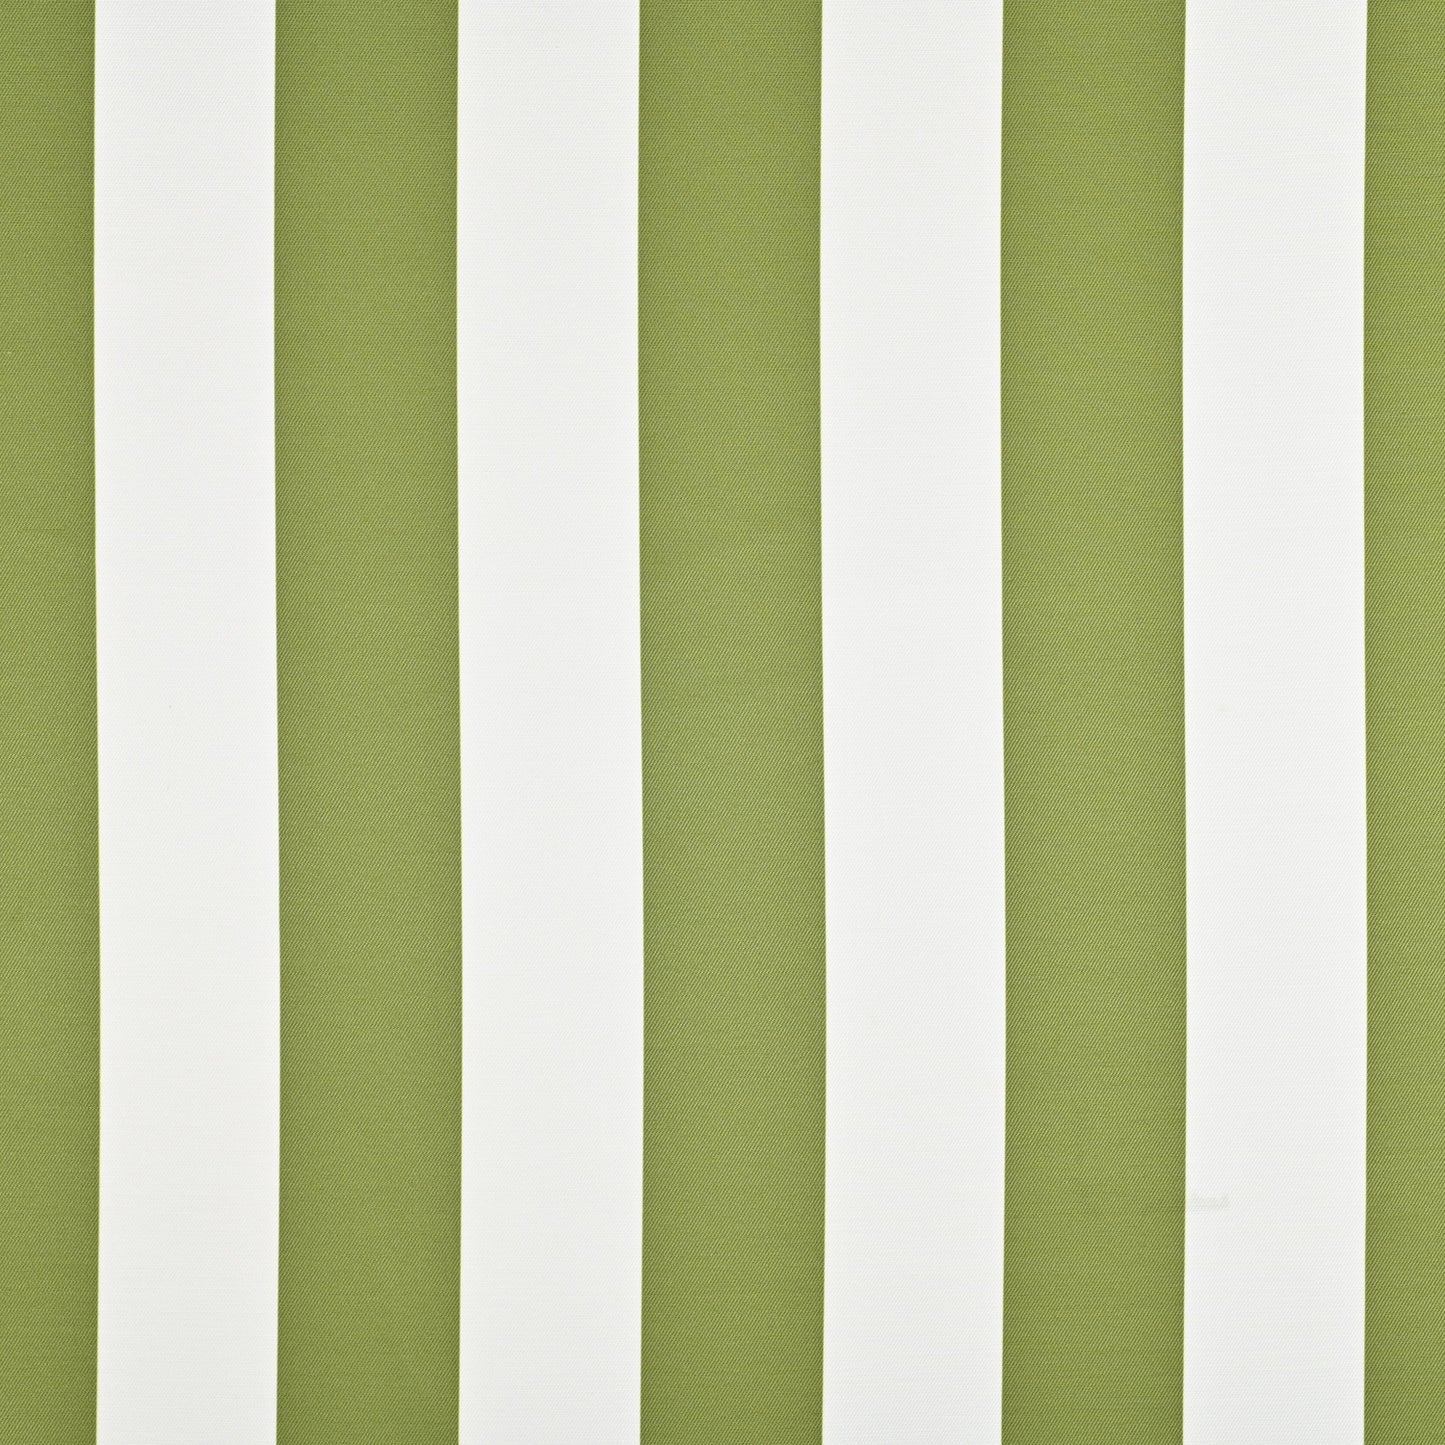 Eco Stripe Broad Chartreuse #621